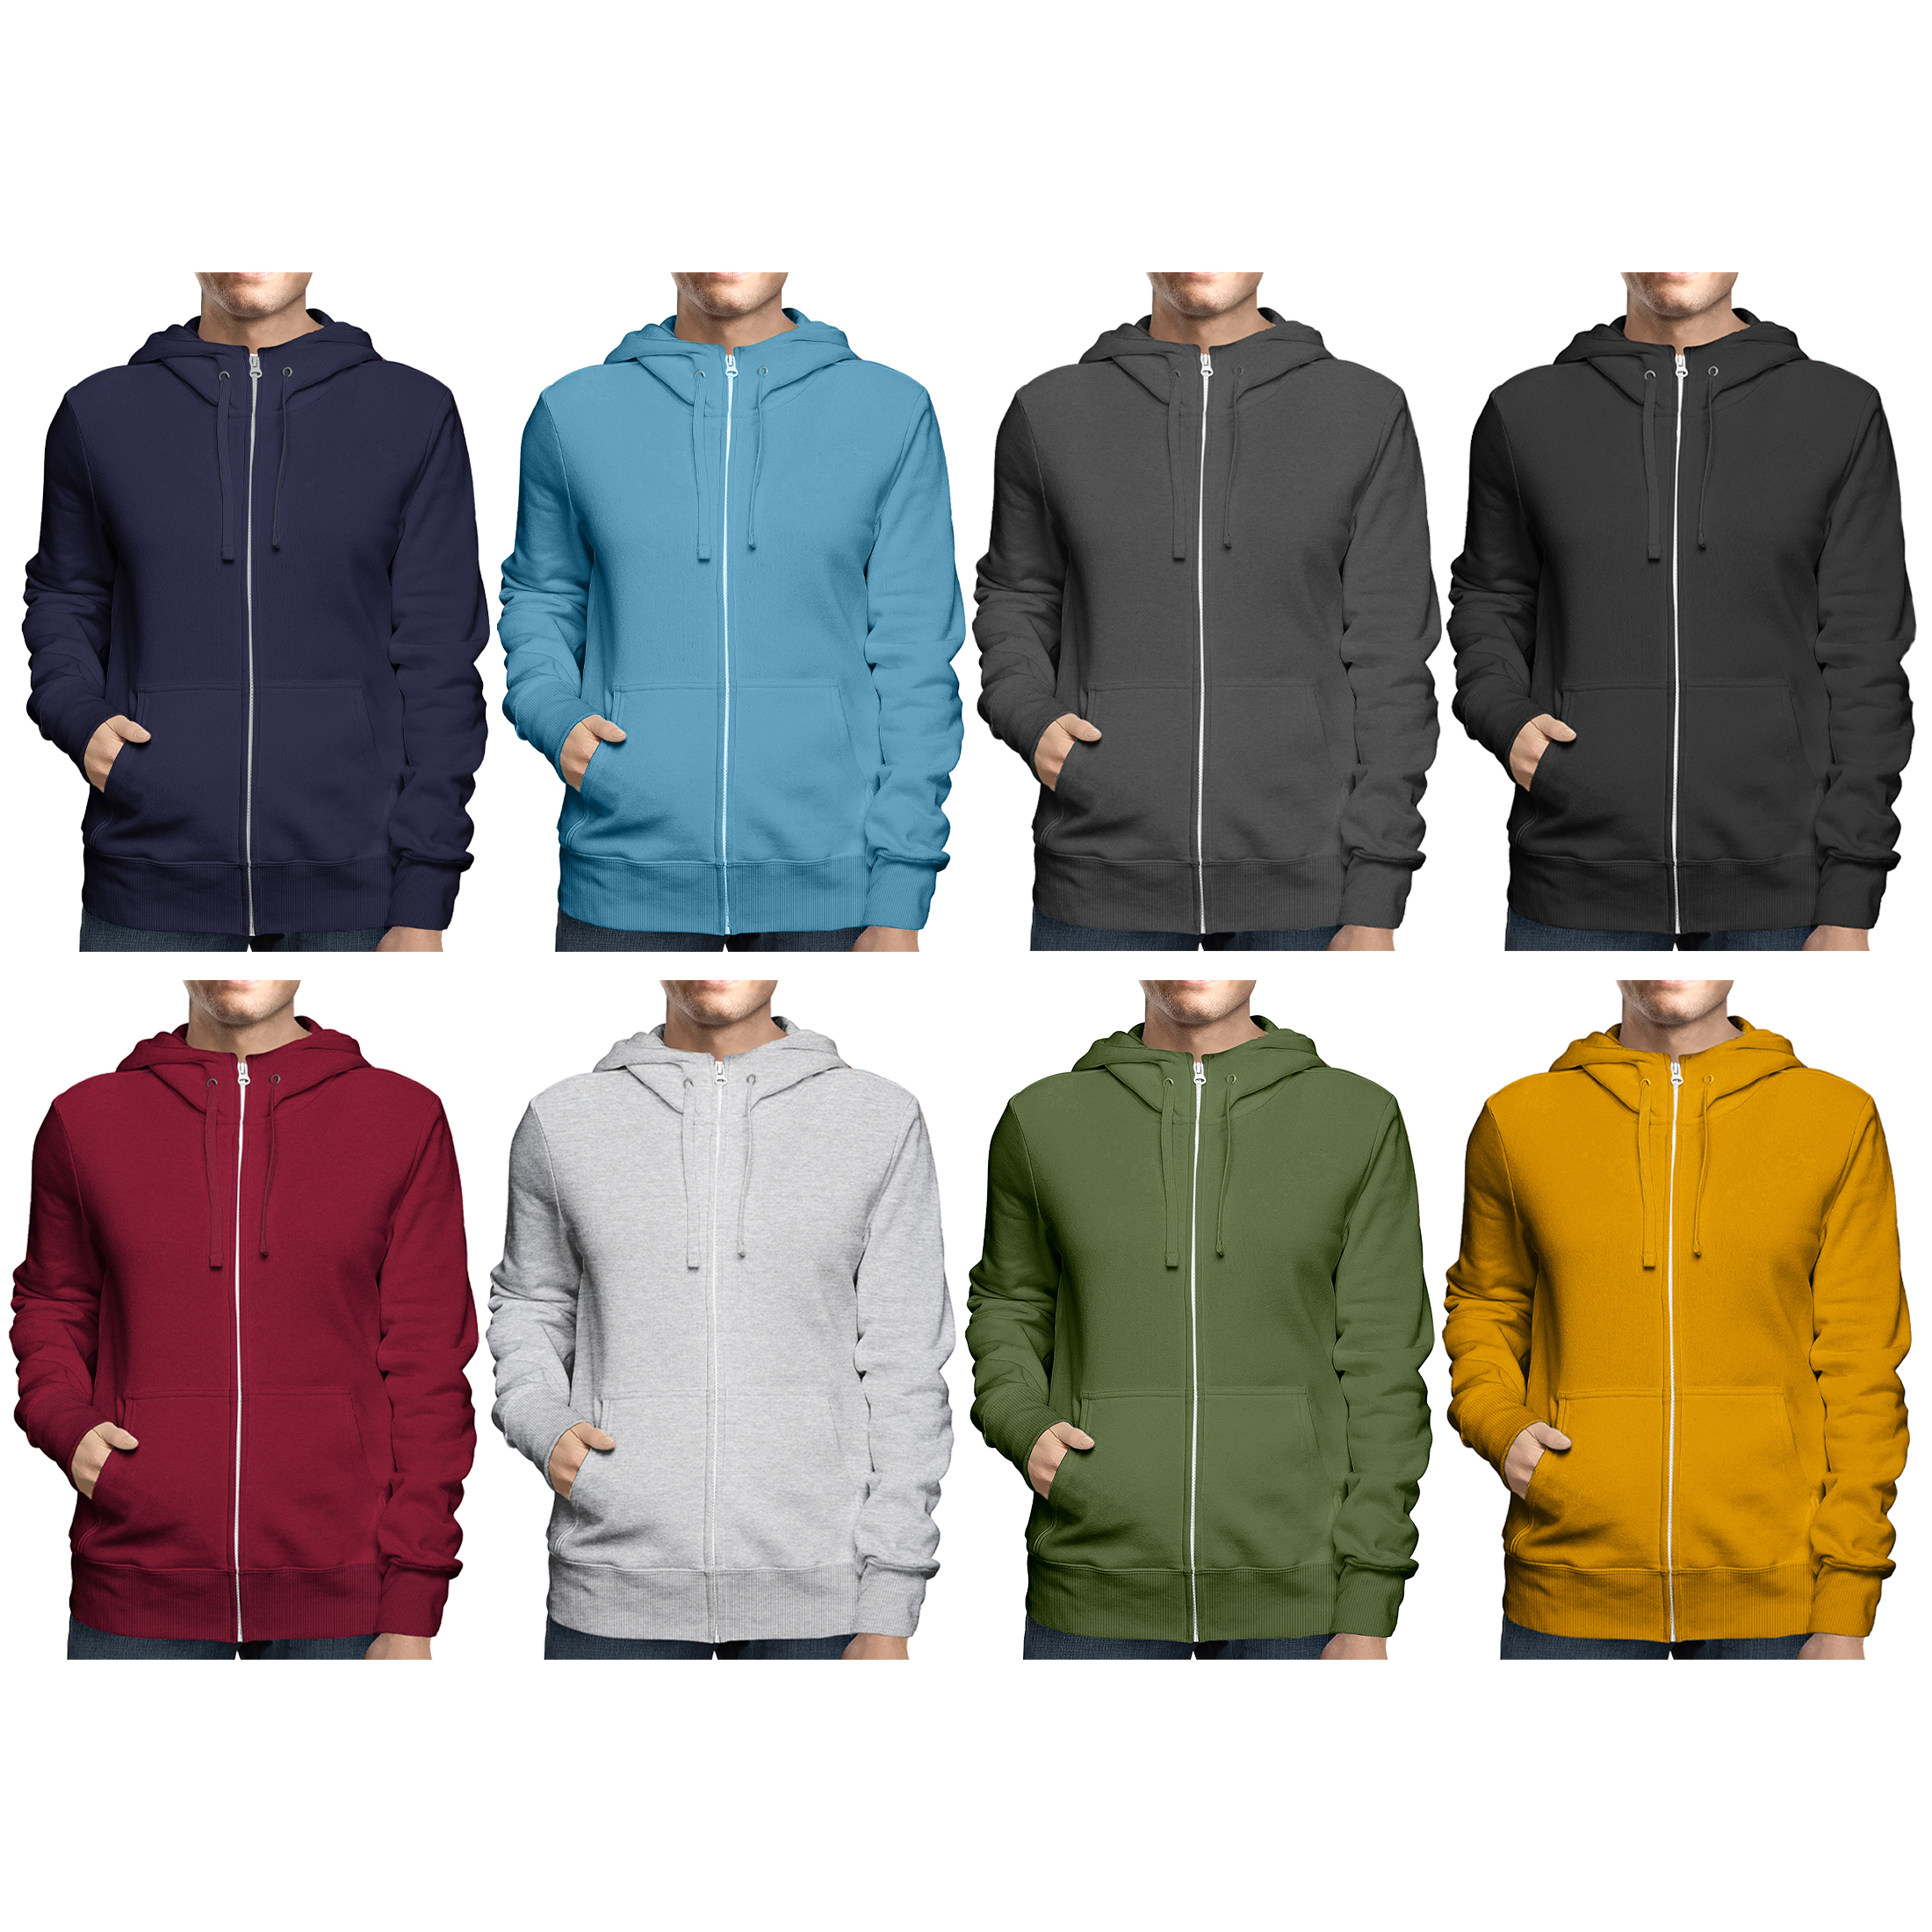 2-Pack: Men's Full Zip Up Fleece-Lined Hoodie Sweatshirt (Big & Tall Size Available) - Navy & Burgundy, Medium